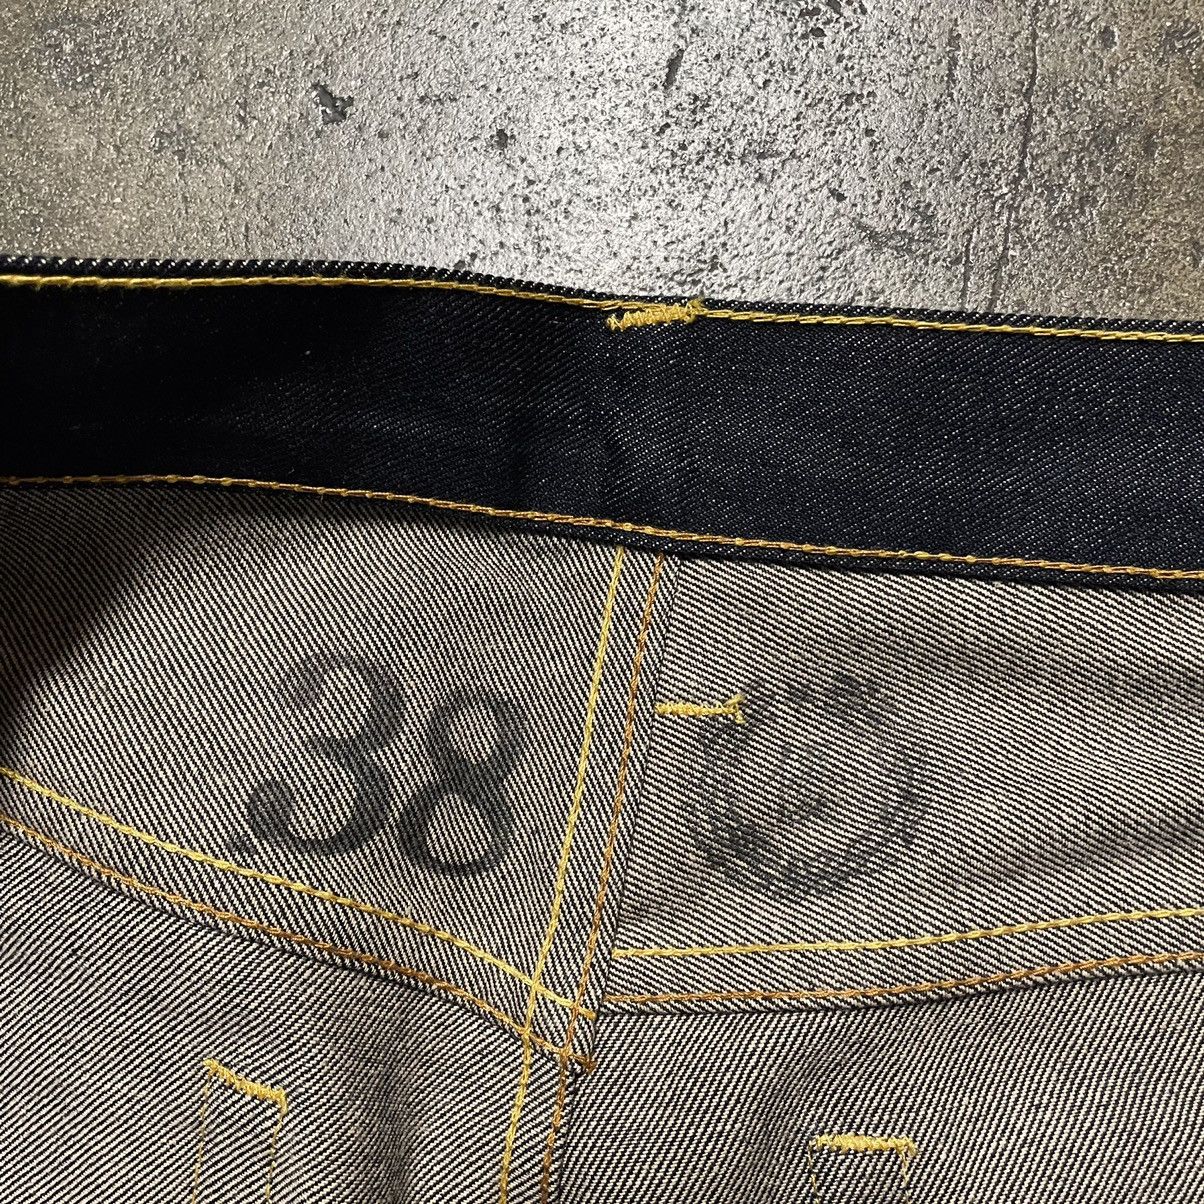 Vintage Red Monkey Company RMC Selvedge Denim Jeans Size US 38 / EU 54 - 6 Thumbnail